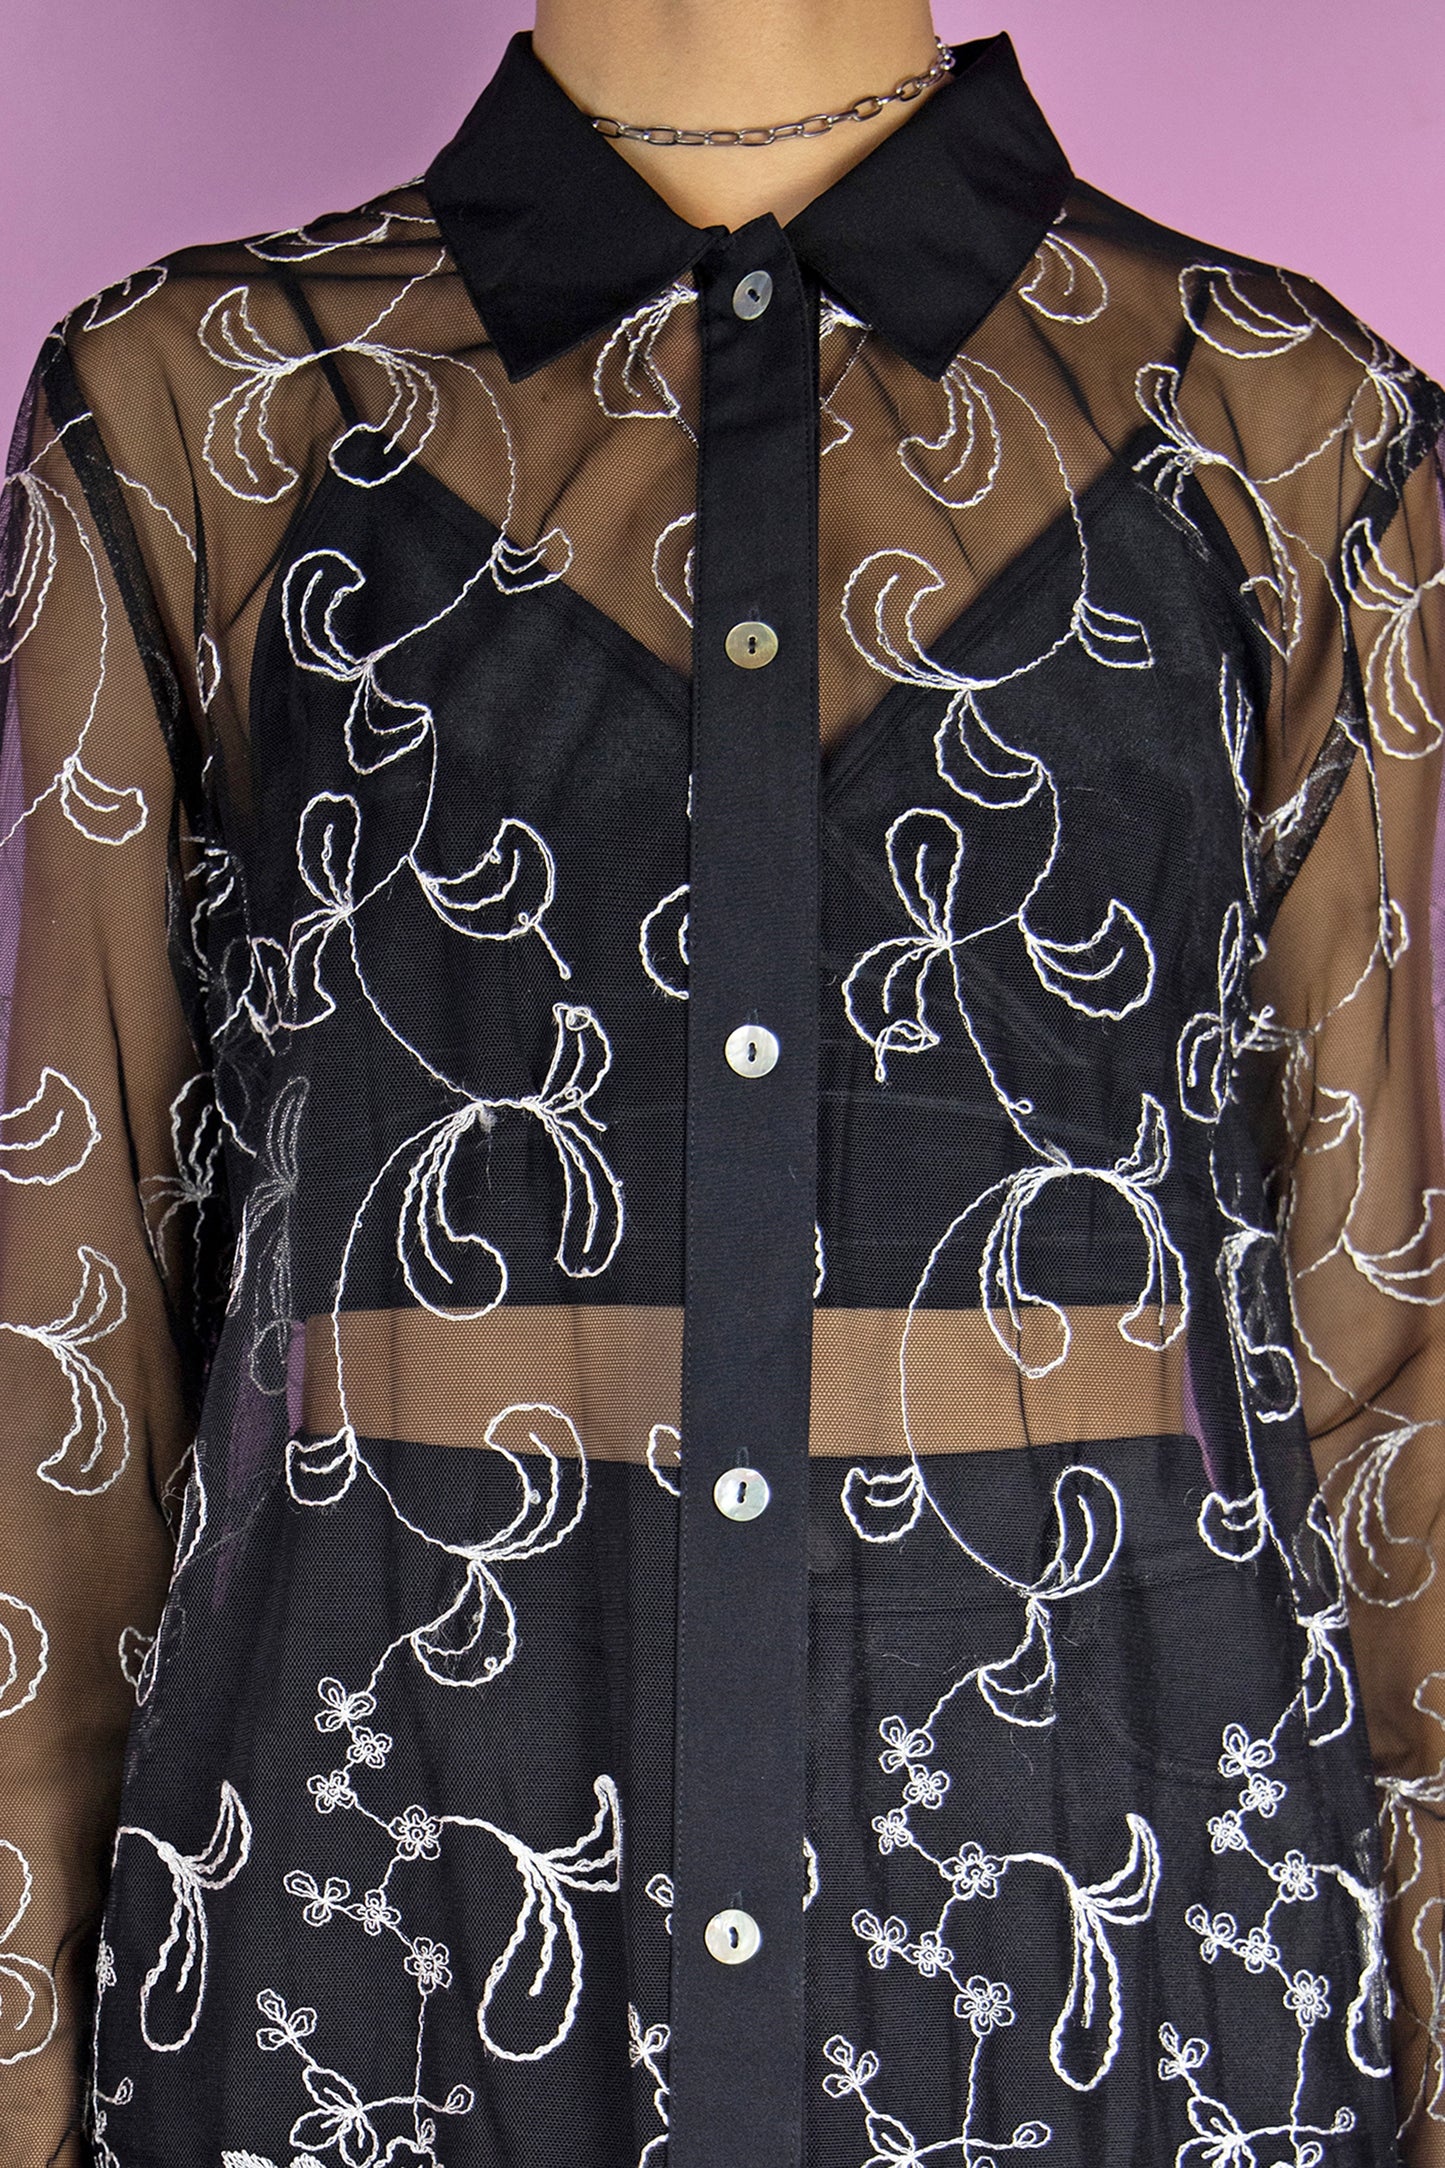 Vintage 90s Black Embroidered Mesh Shirt - M